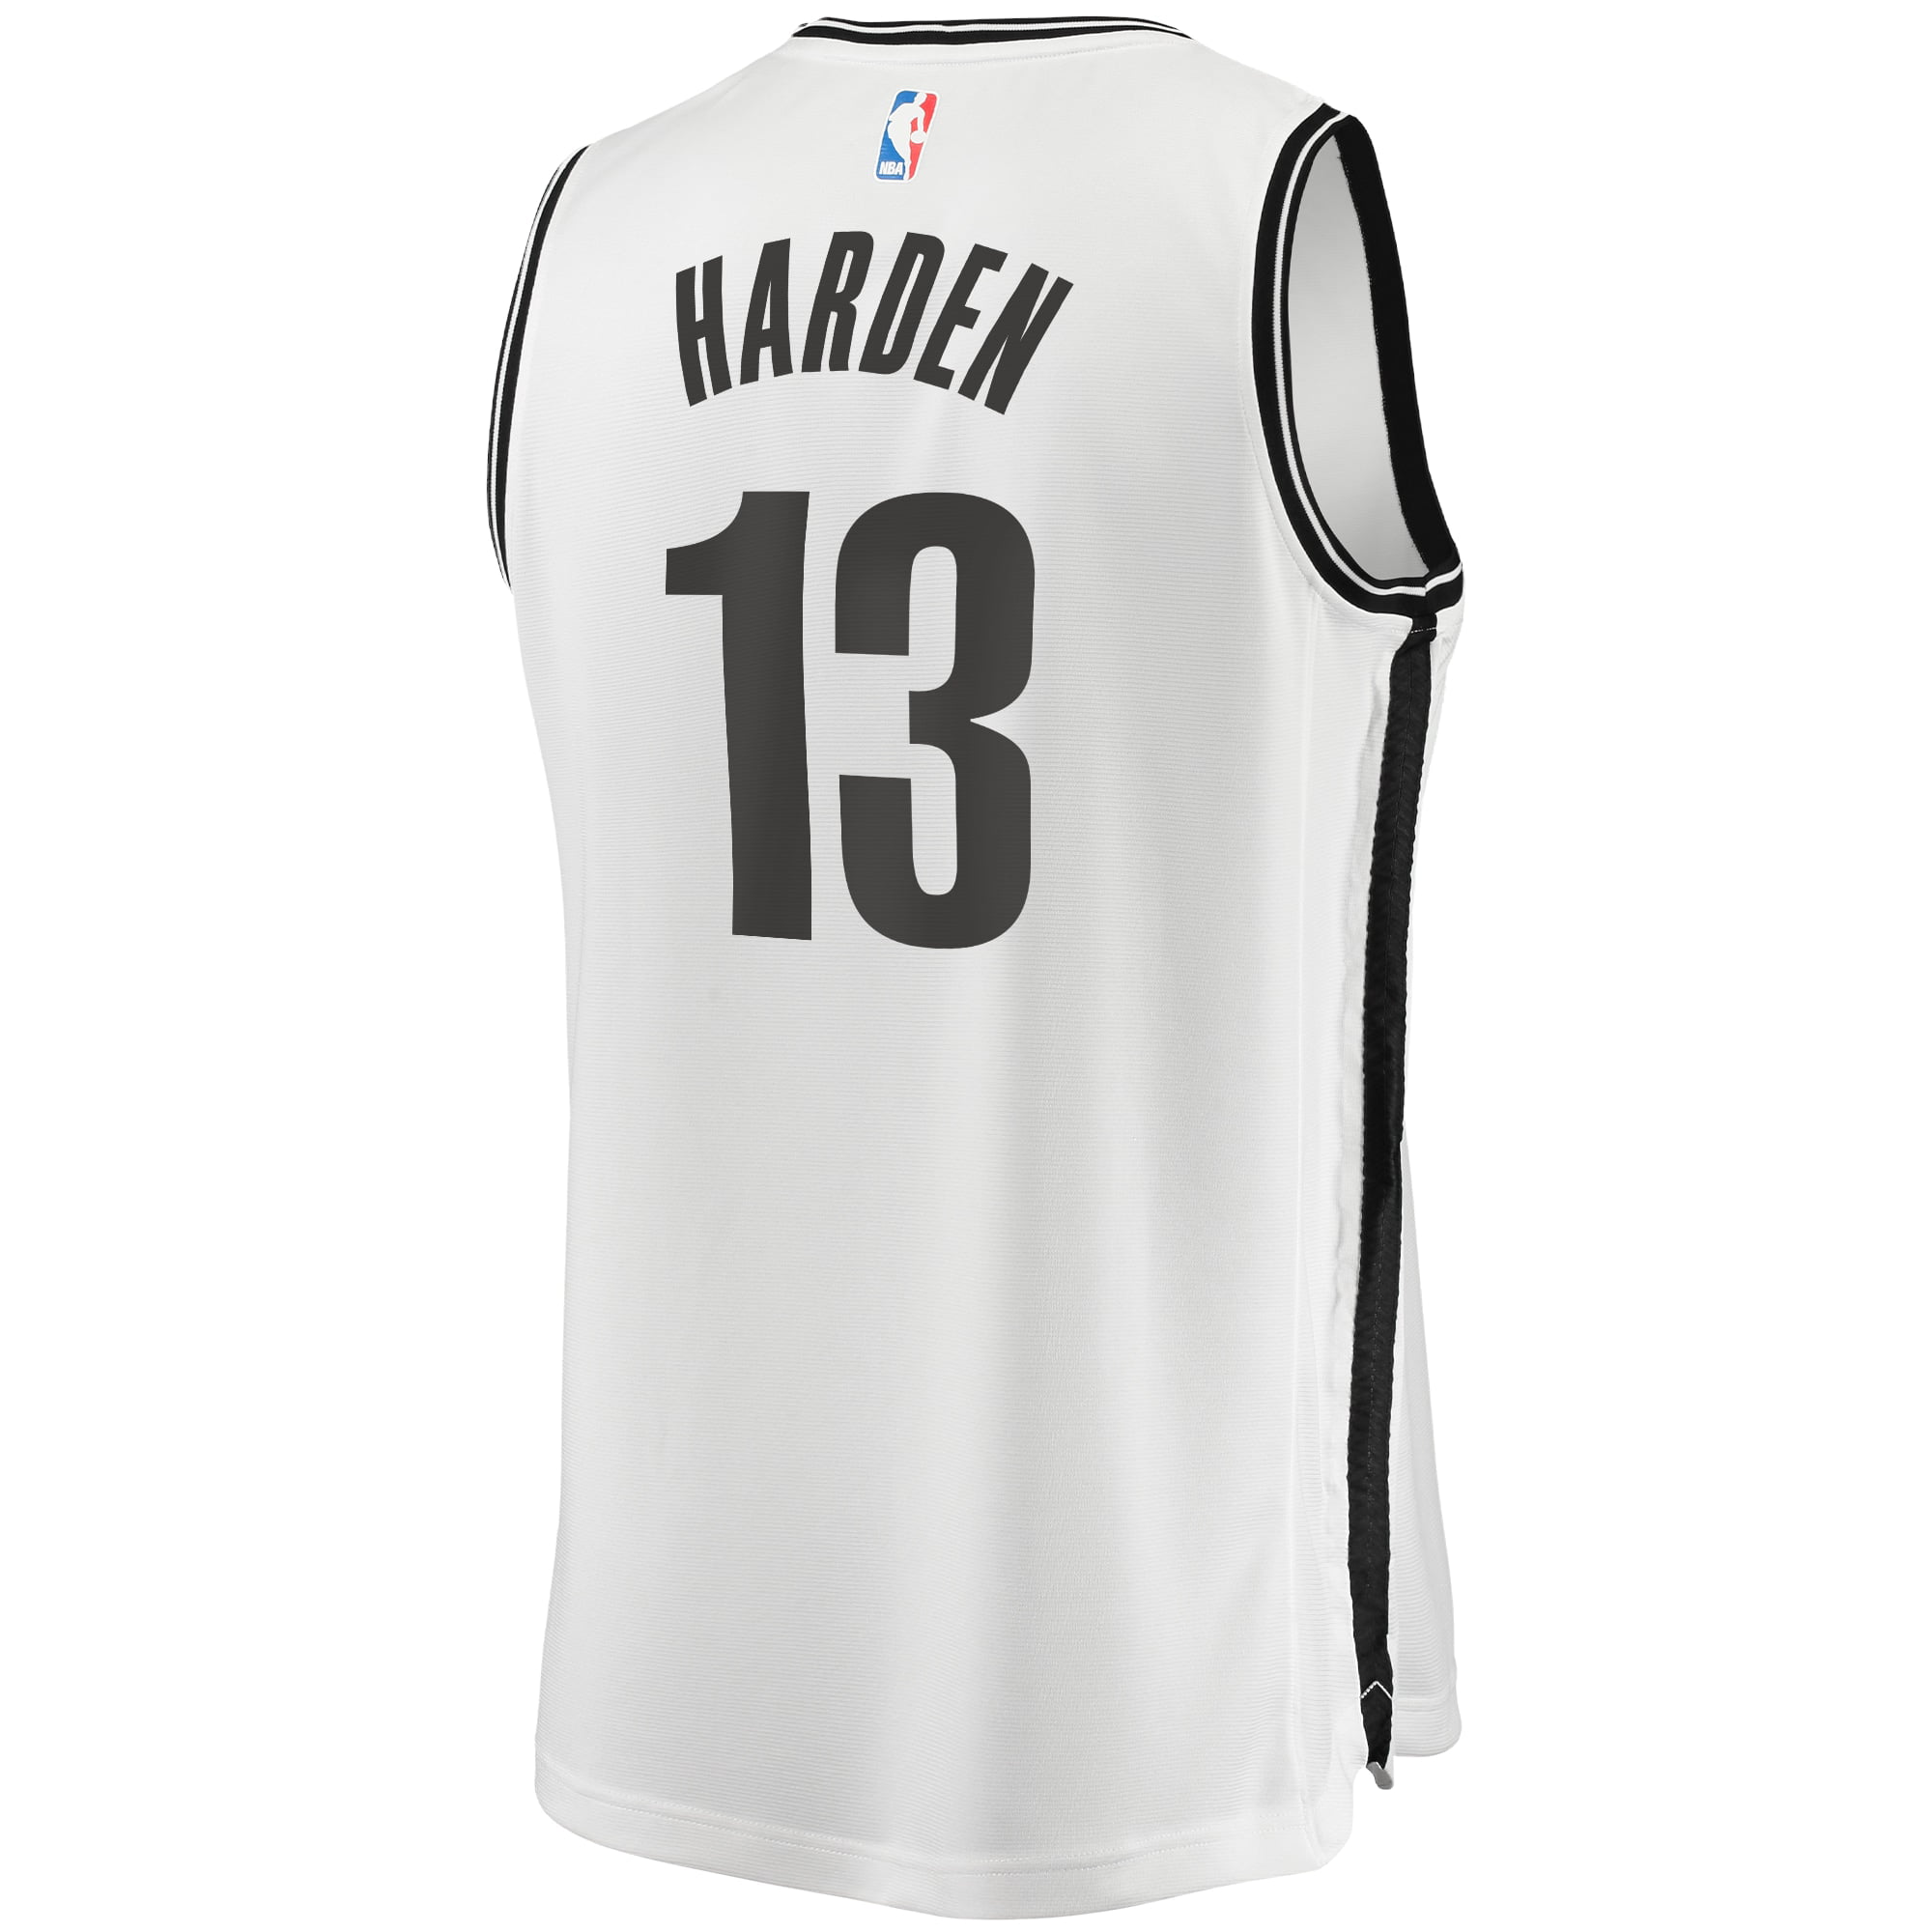 James Harden Brooklyn Nets Game-Used Jordan Brand #13 Statement Jersey vs.  Miami Heat on January 25, 2021 - Size 50+4